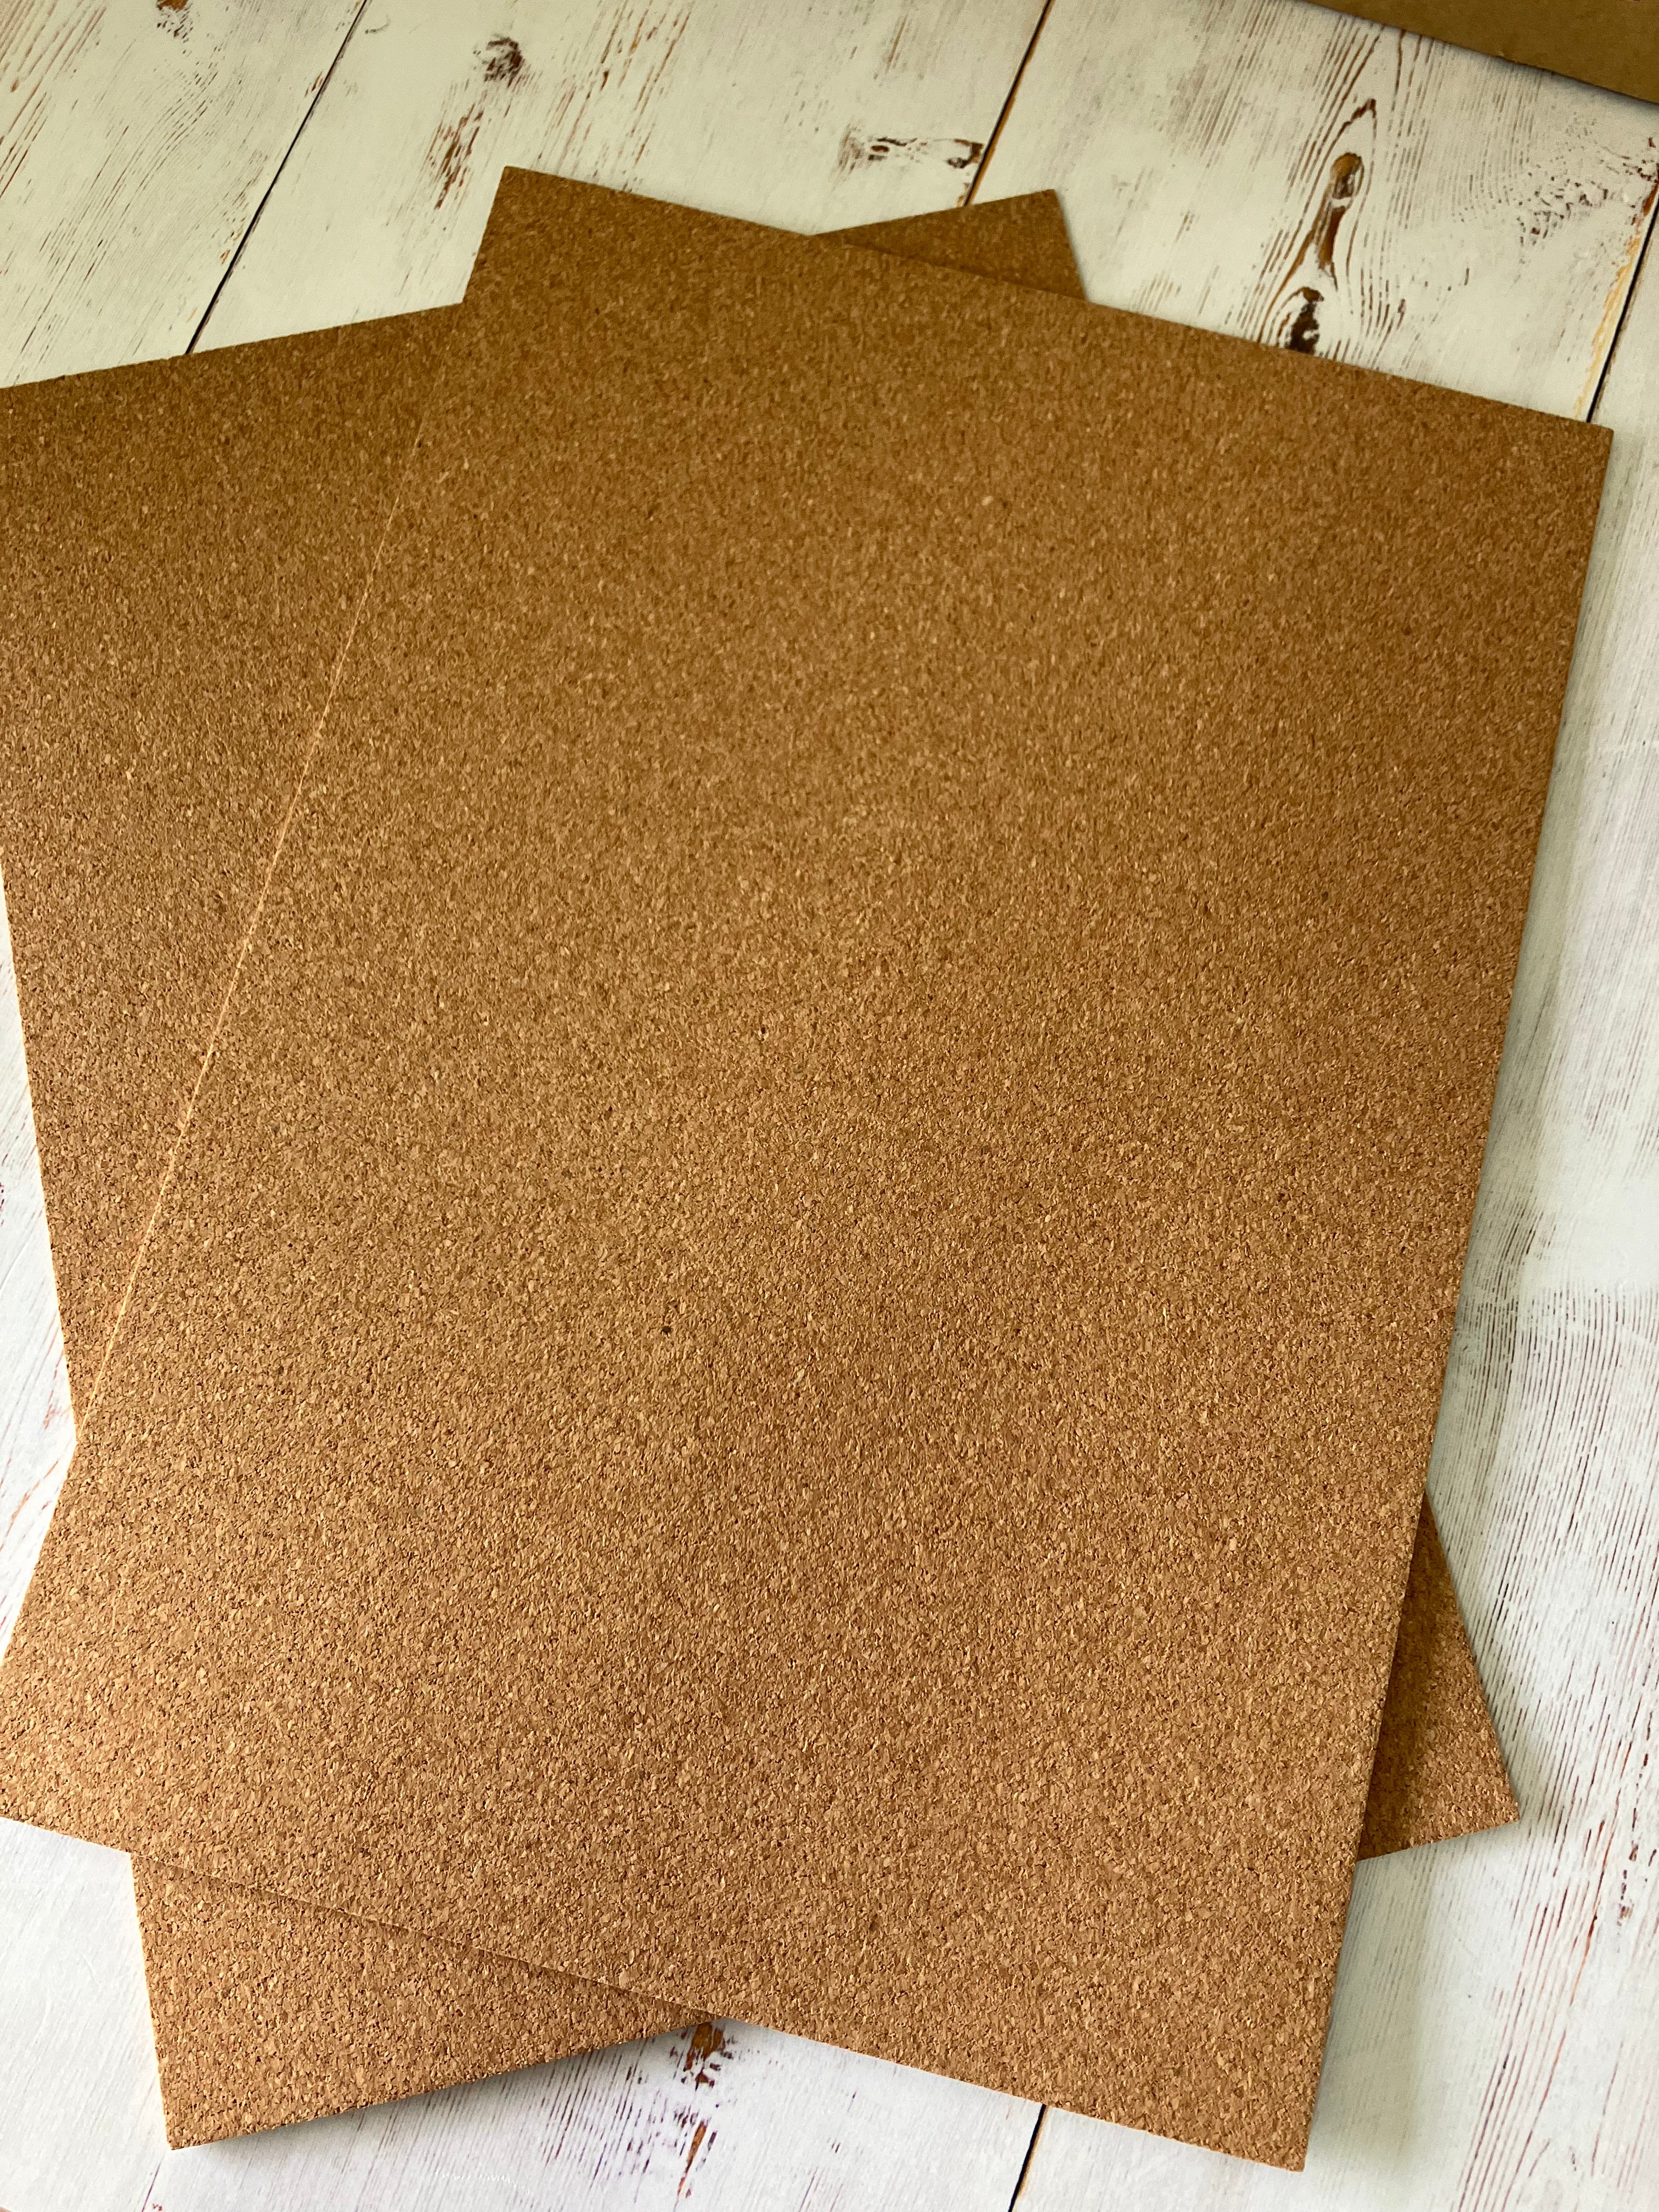 Self Adhesive Cork Sheets A4 - 2mm (TWO SHEETS)